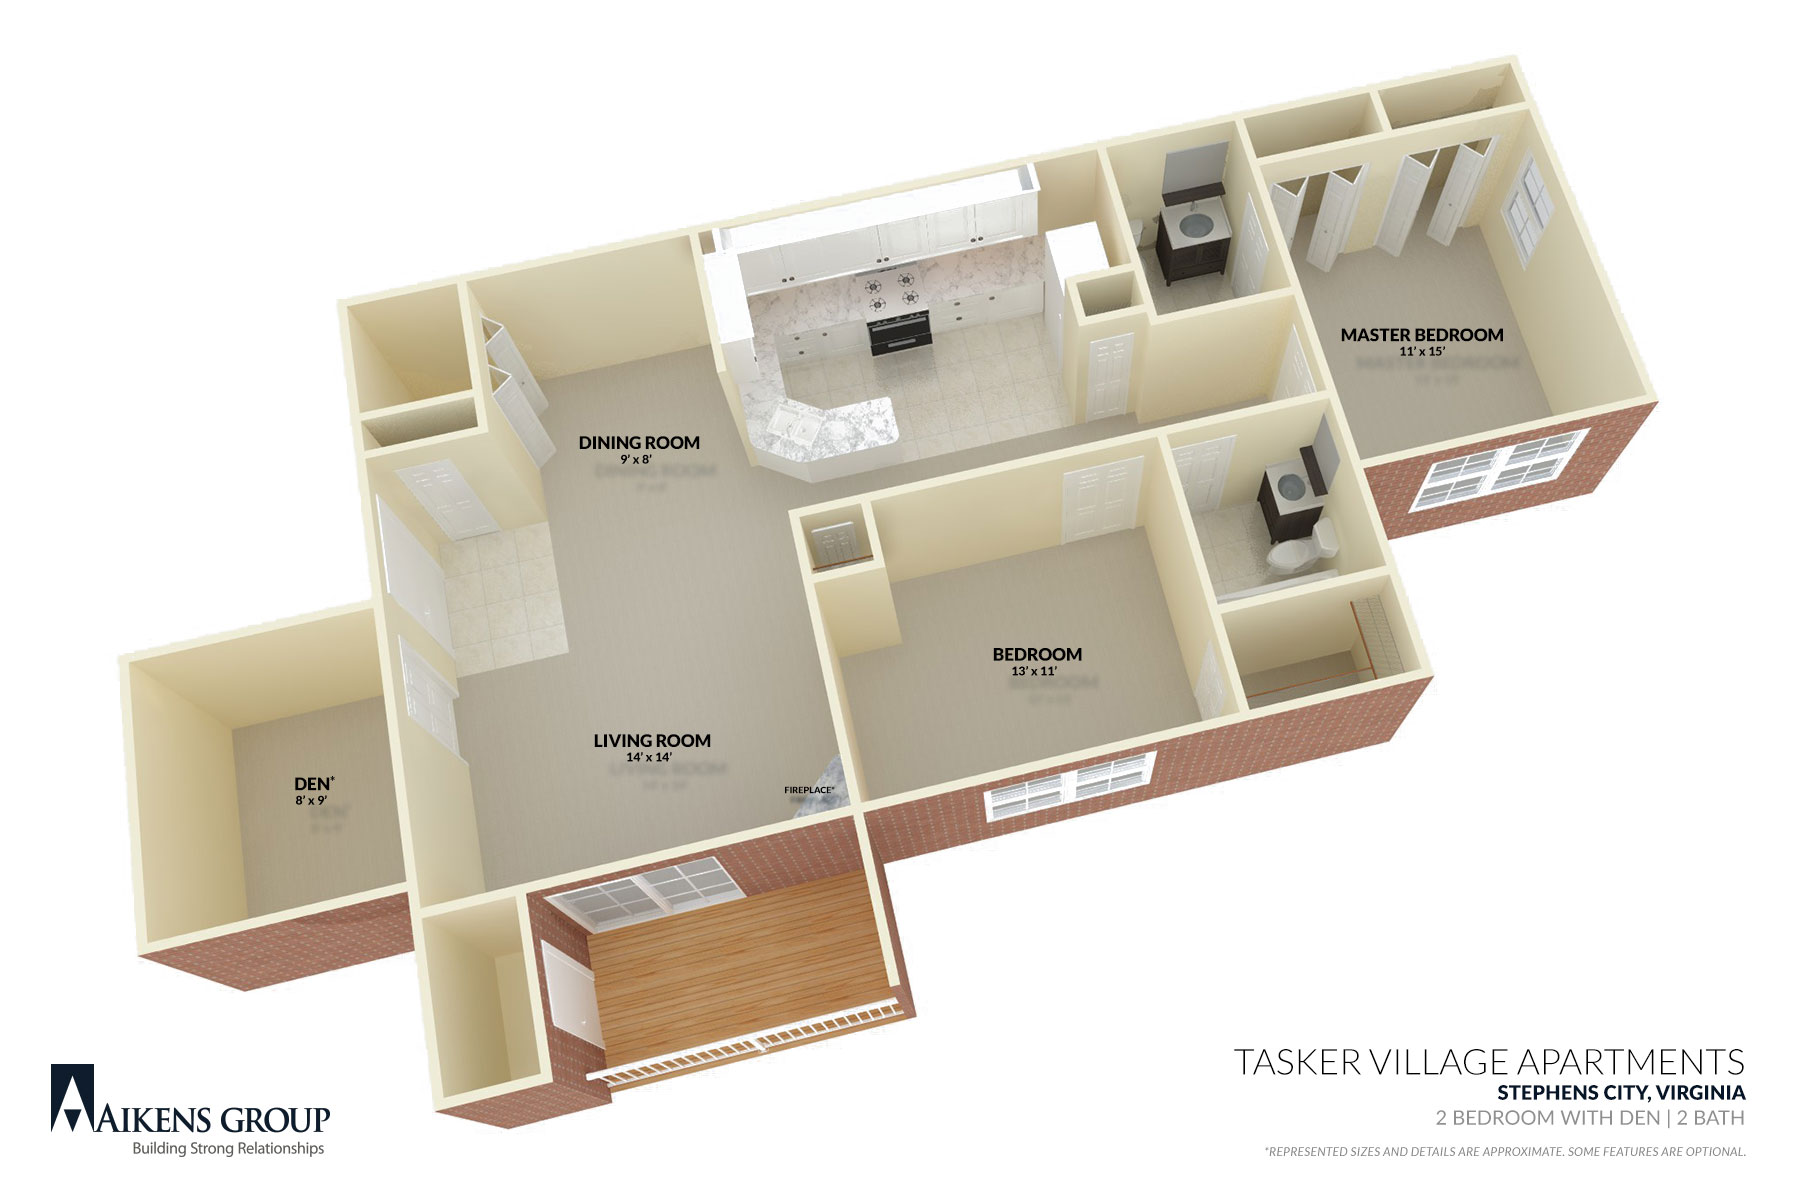 fire en lille Bedre Tasker Village Apartments in Stephens City, VA - Aikens Group